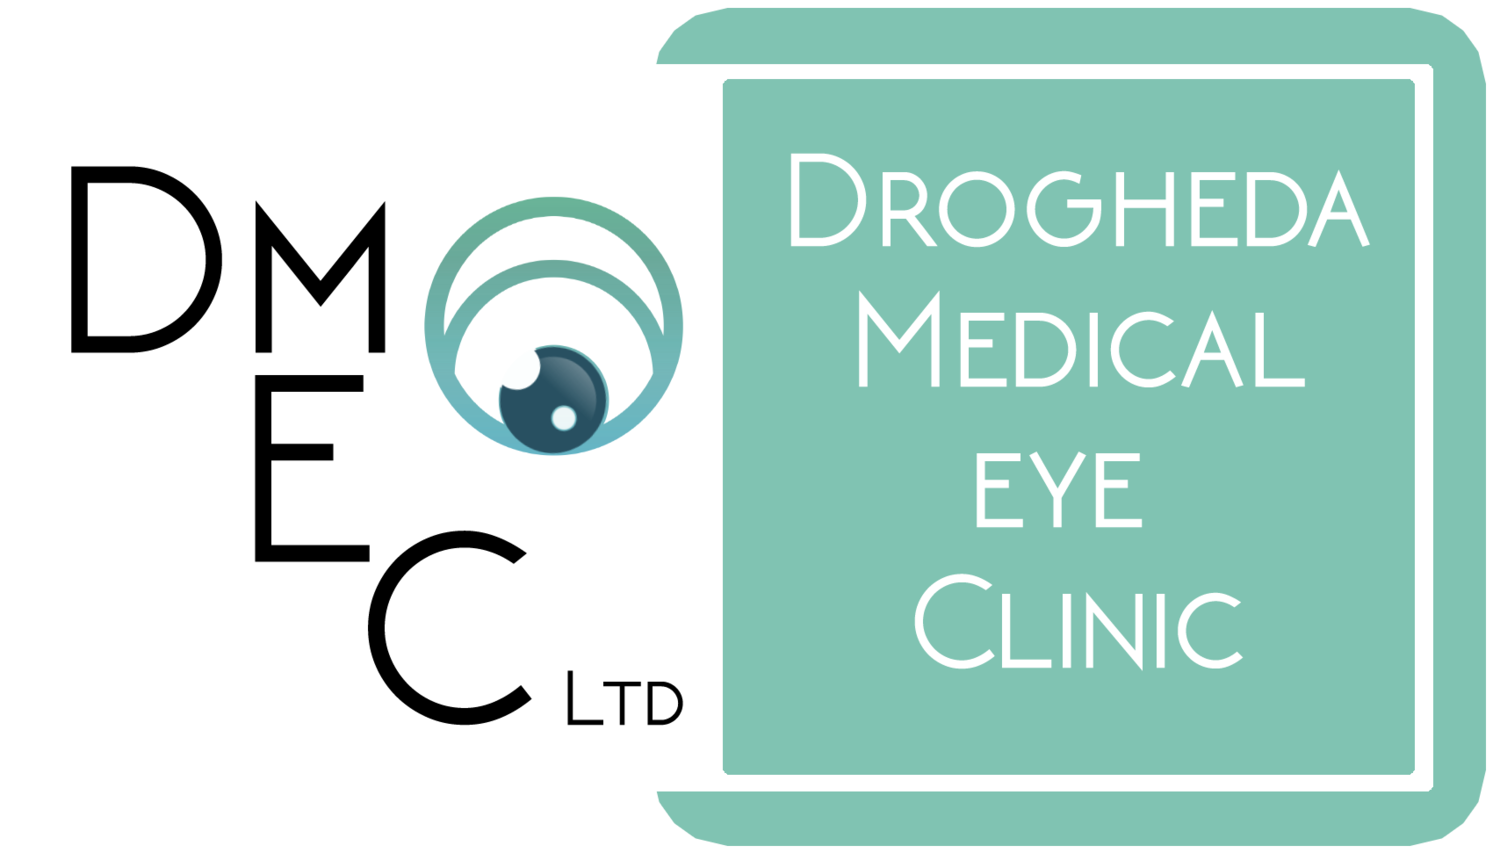 Drogheda Medical Eye Clinic